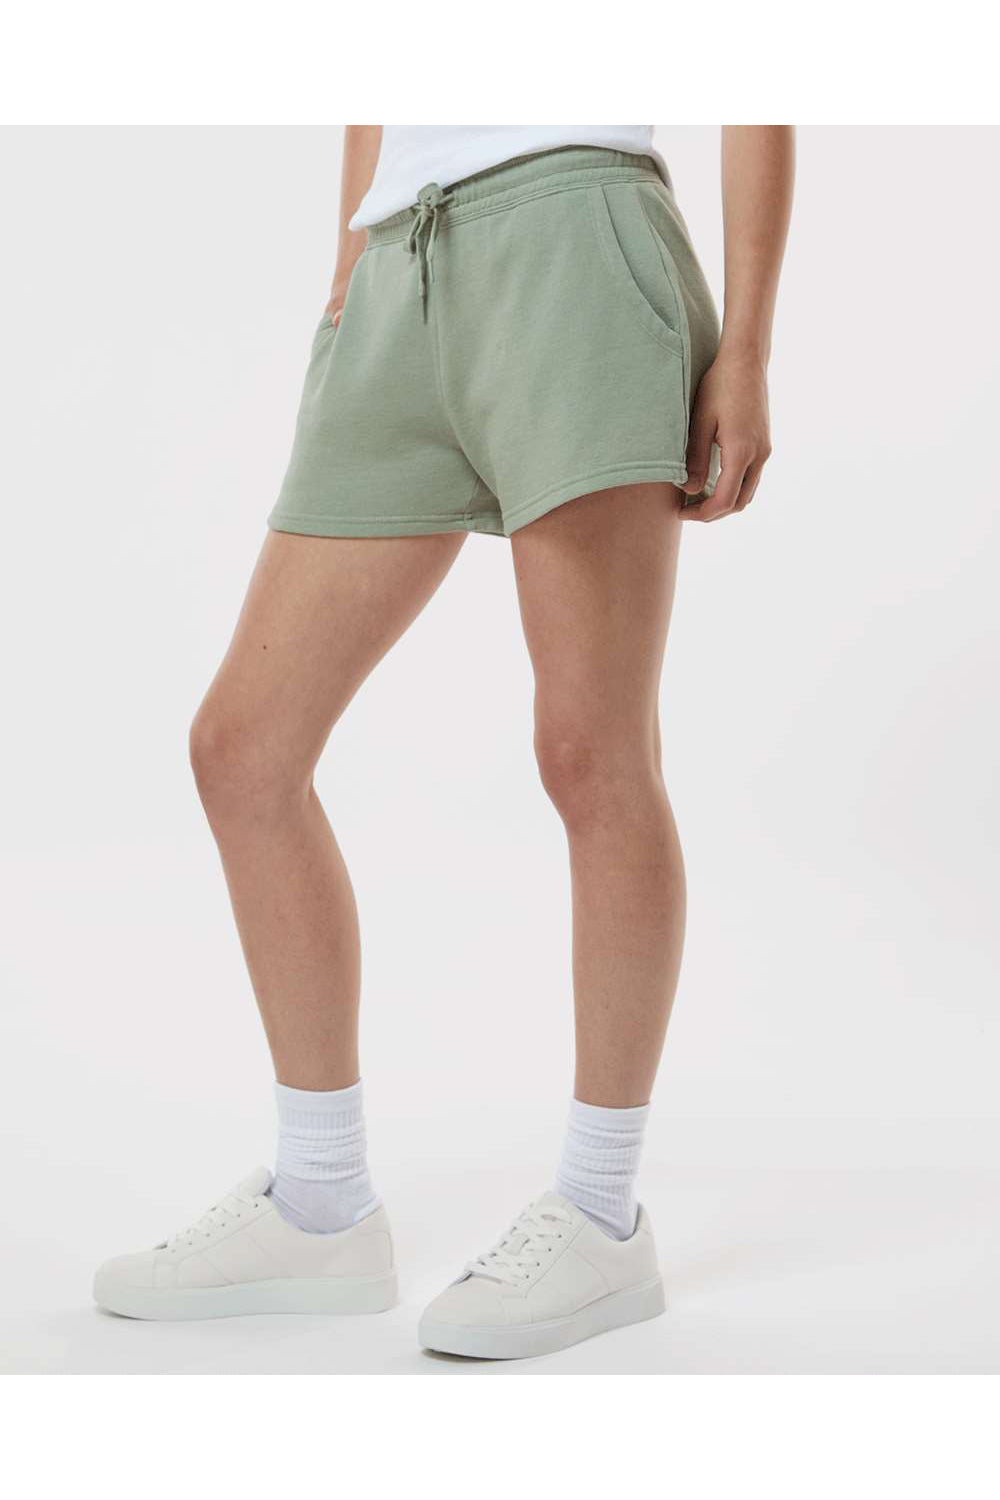 Independent Trading Co. PRM20SRT Womens California Wave Wash Fleece Shorts w/ Pockets Sage Green Model Side